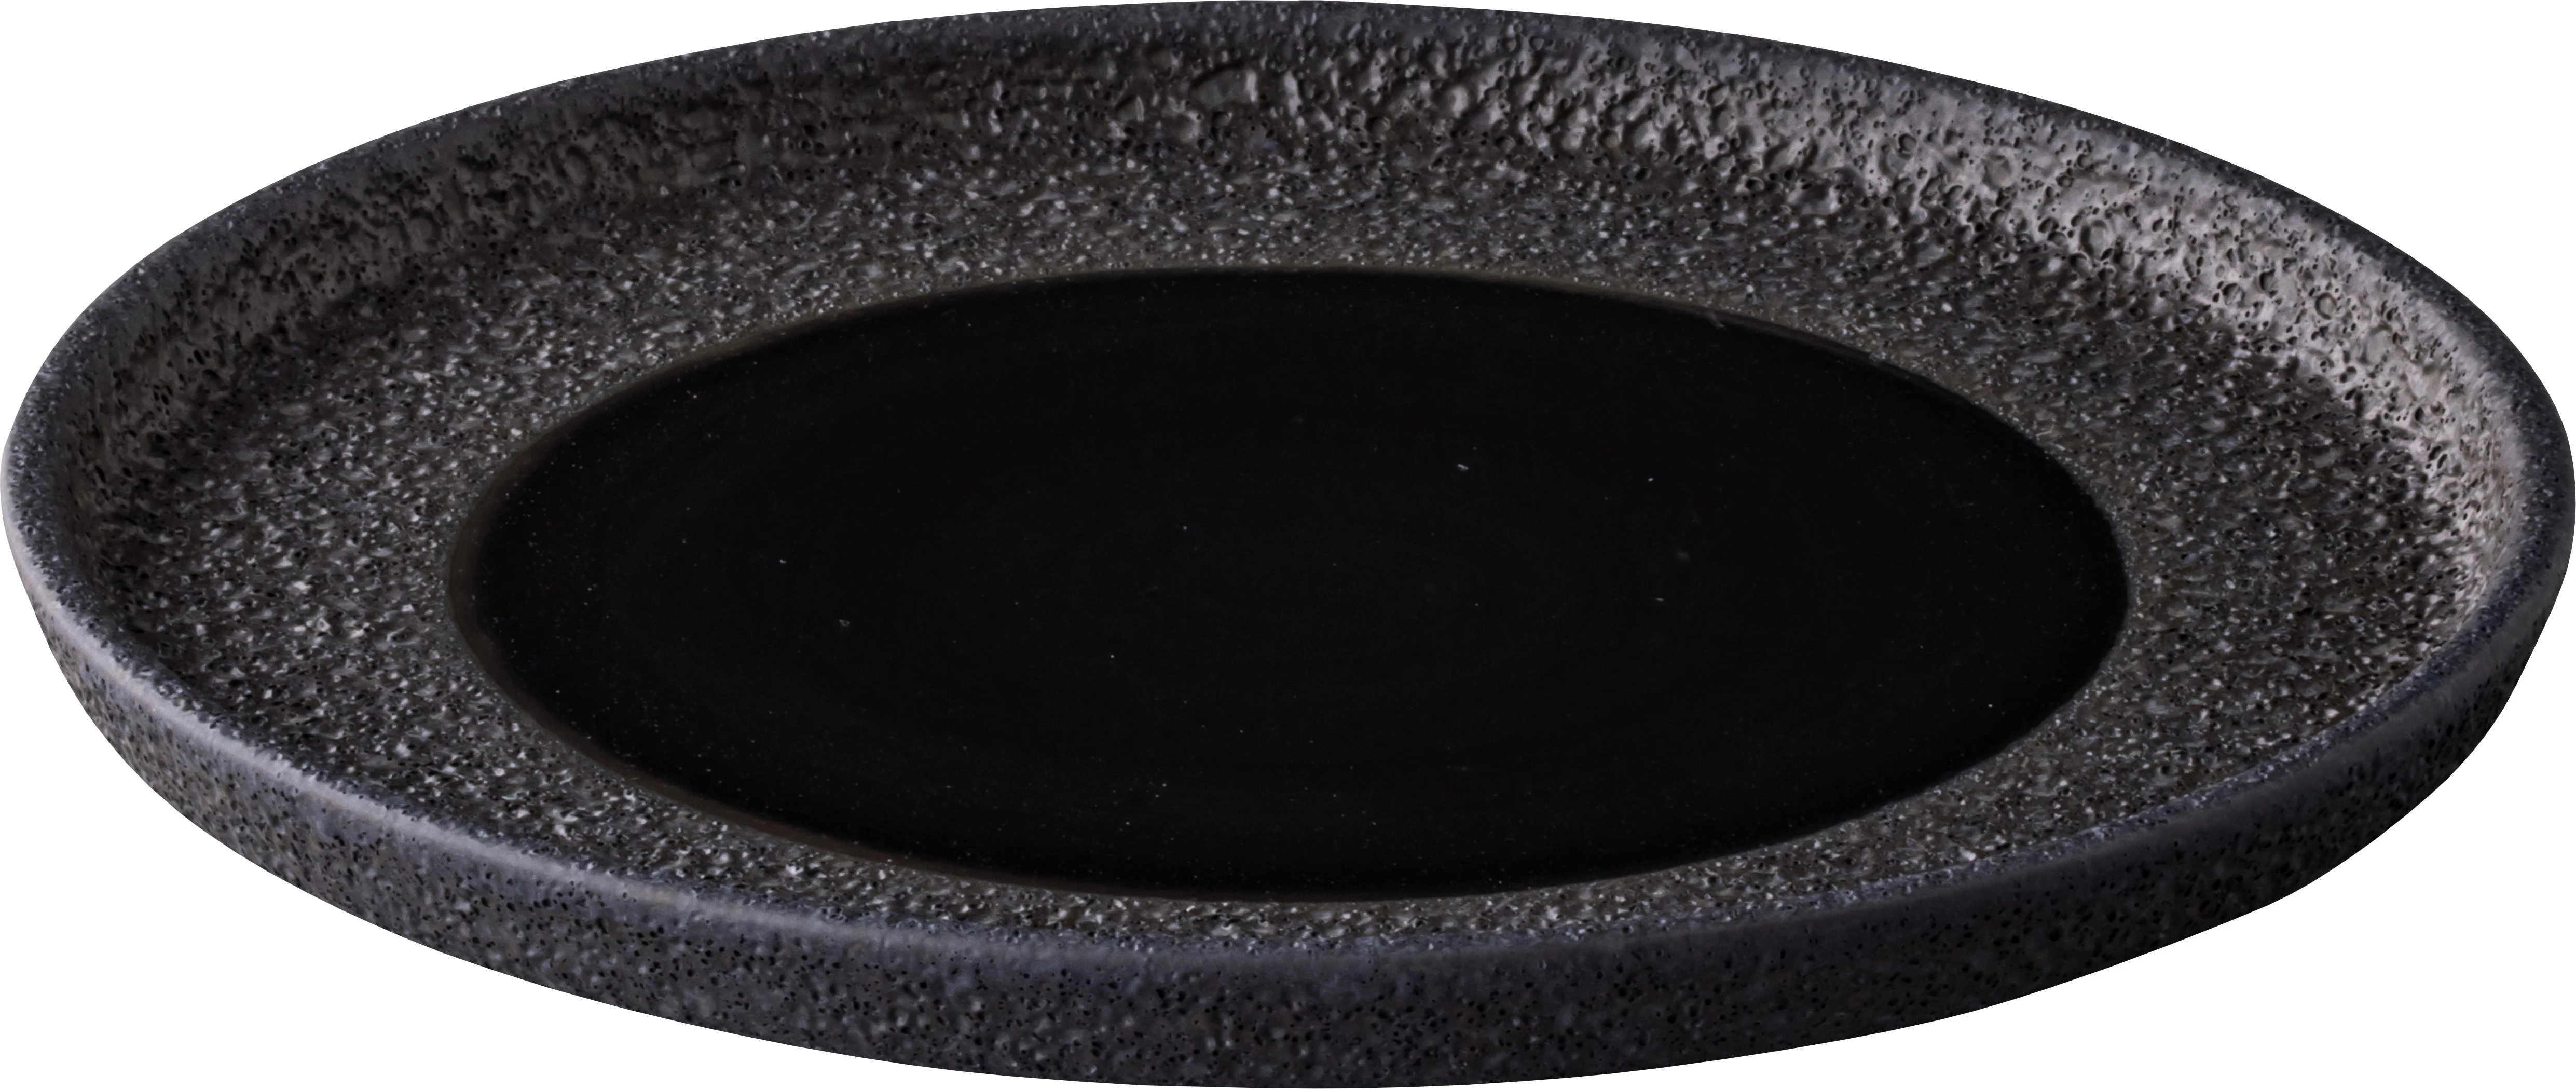 Studio Raw flad tallerken, sort, ø22 cm